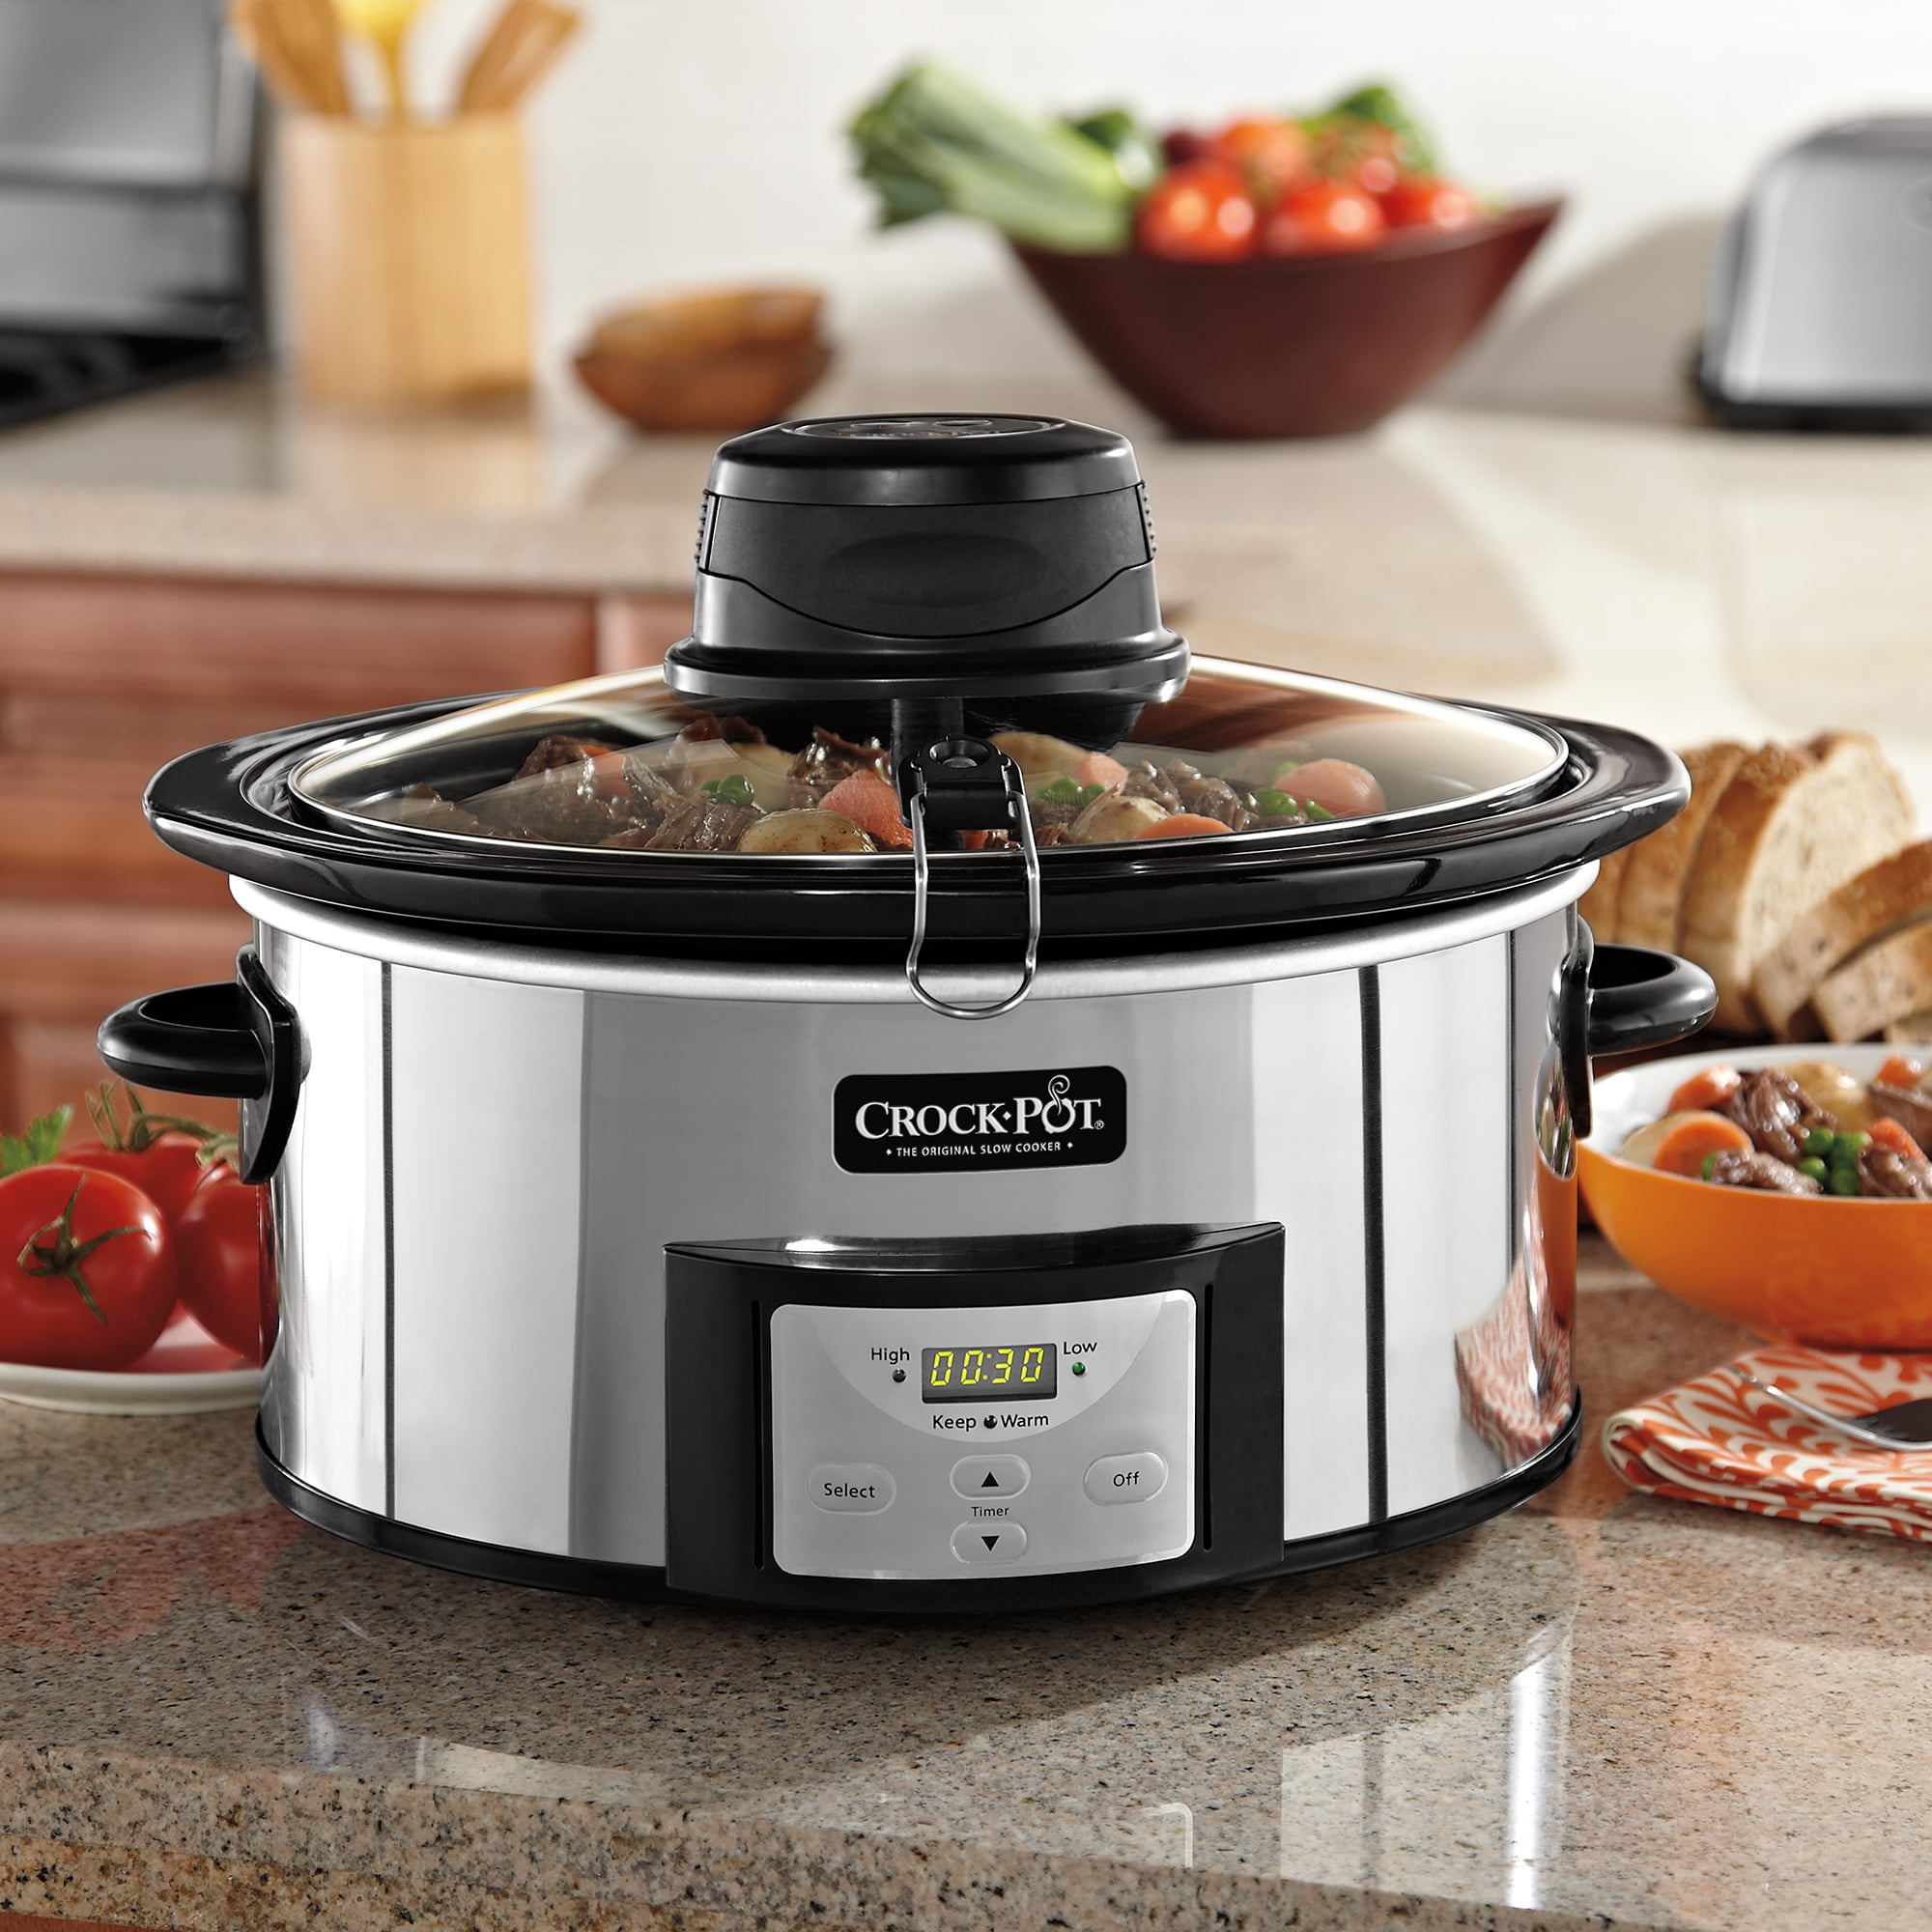  Crock-Pot SCCPVC600AS-B 6-Quart Digital Slow Cooker with iStir  Stirring System, Black, 6 Qt: Home & Kitchen